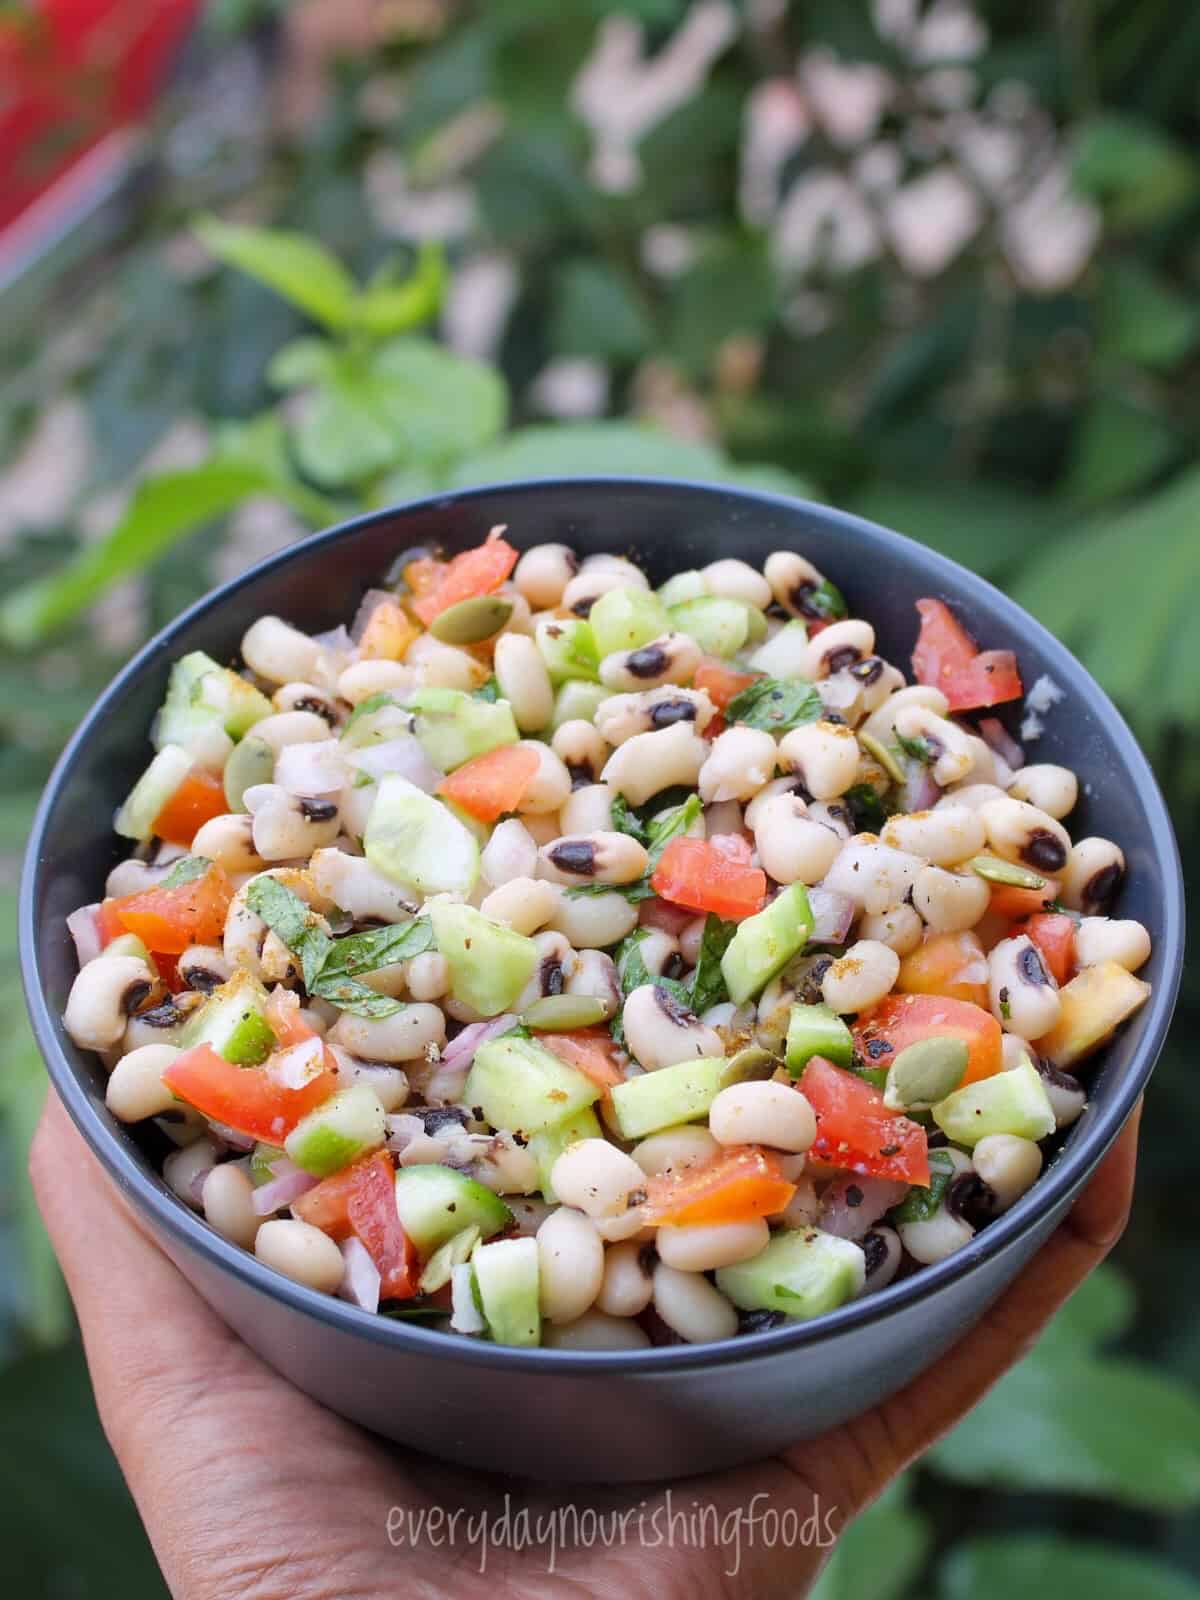 black eyed peas salad in a bowl